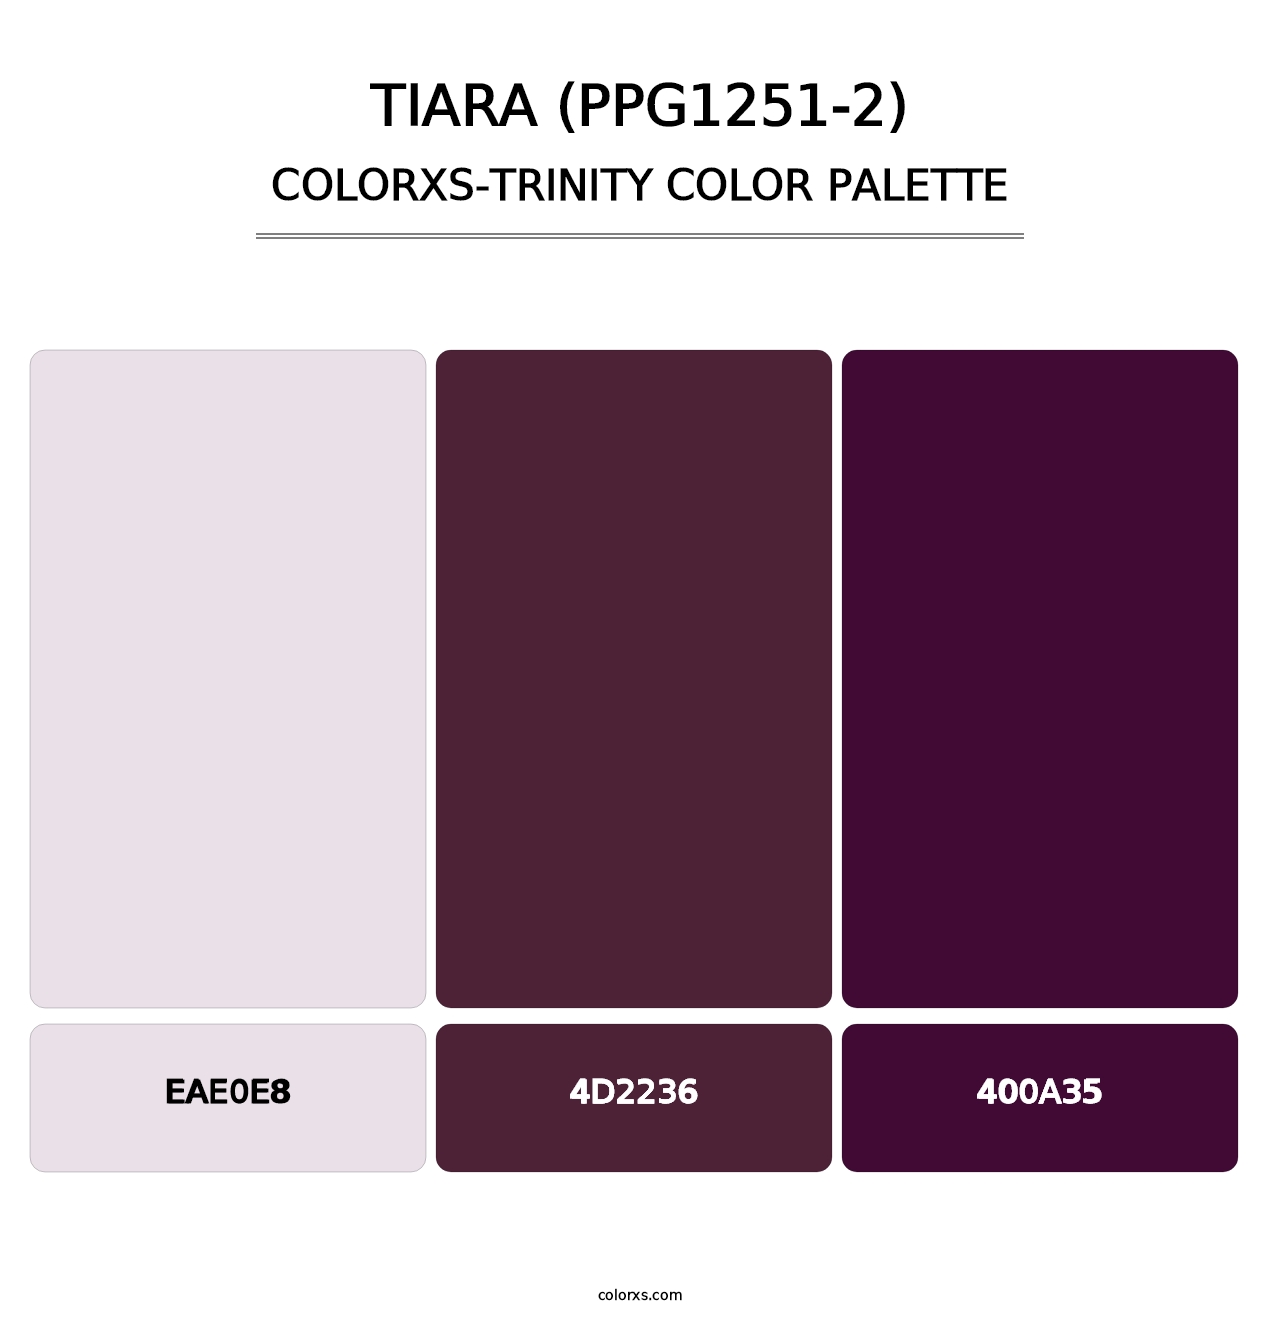 Tiara (PPG1251-2) - Colorxs Trinity Palette